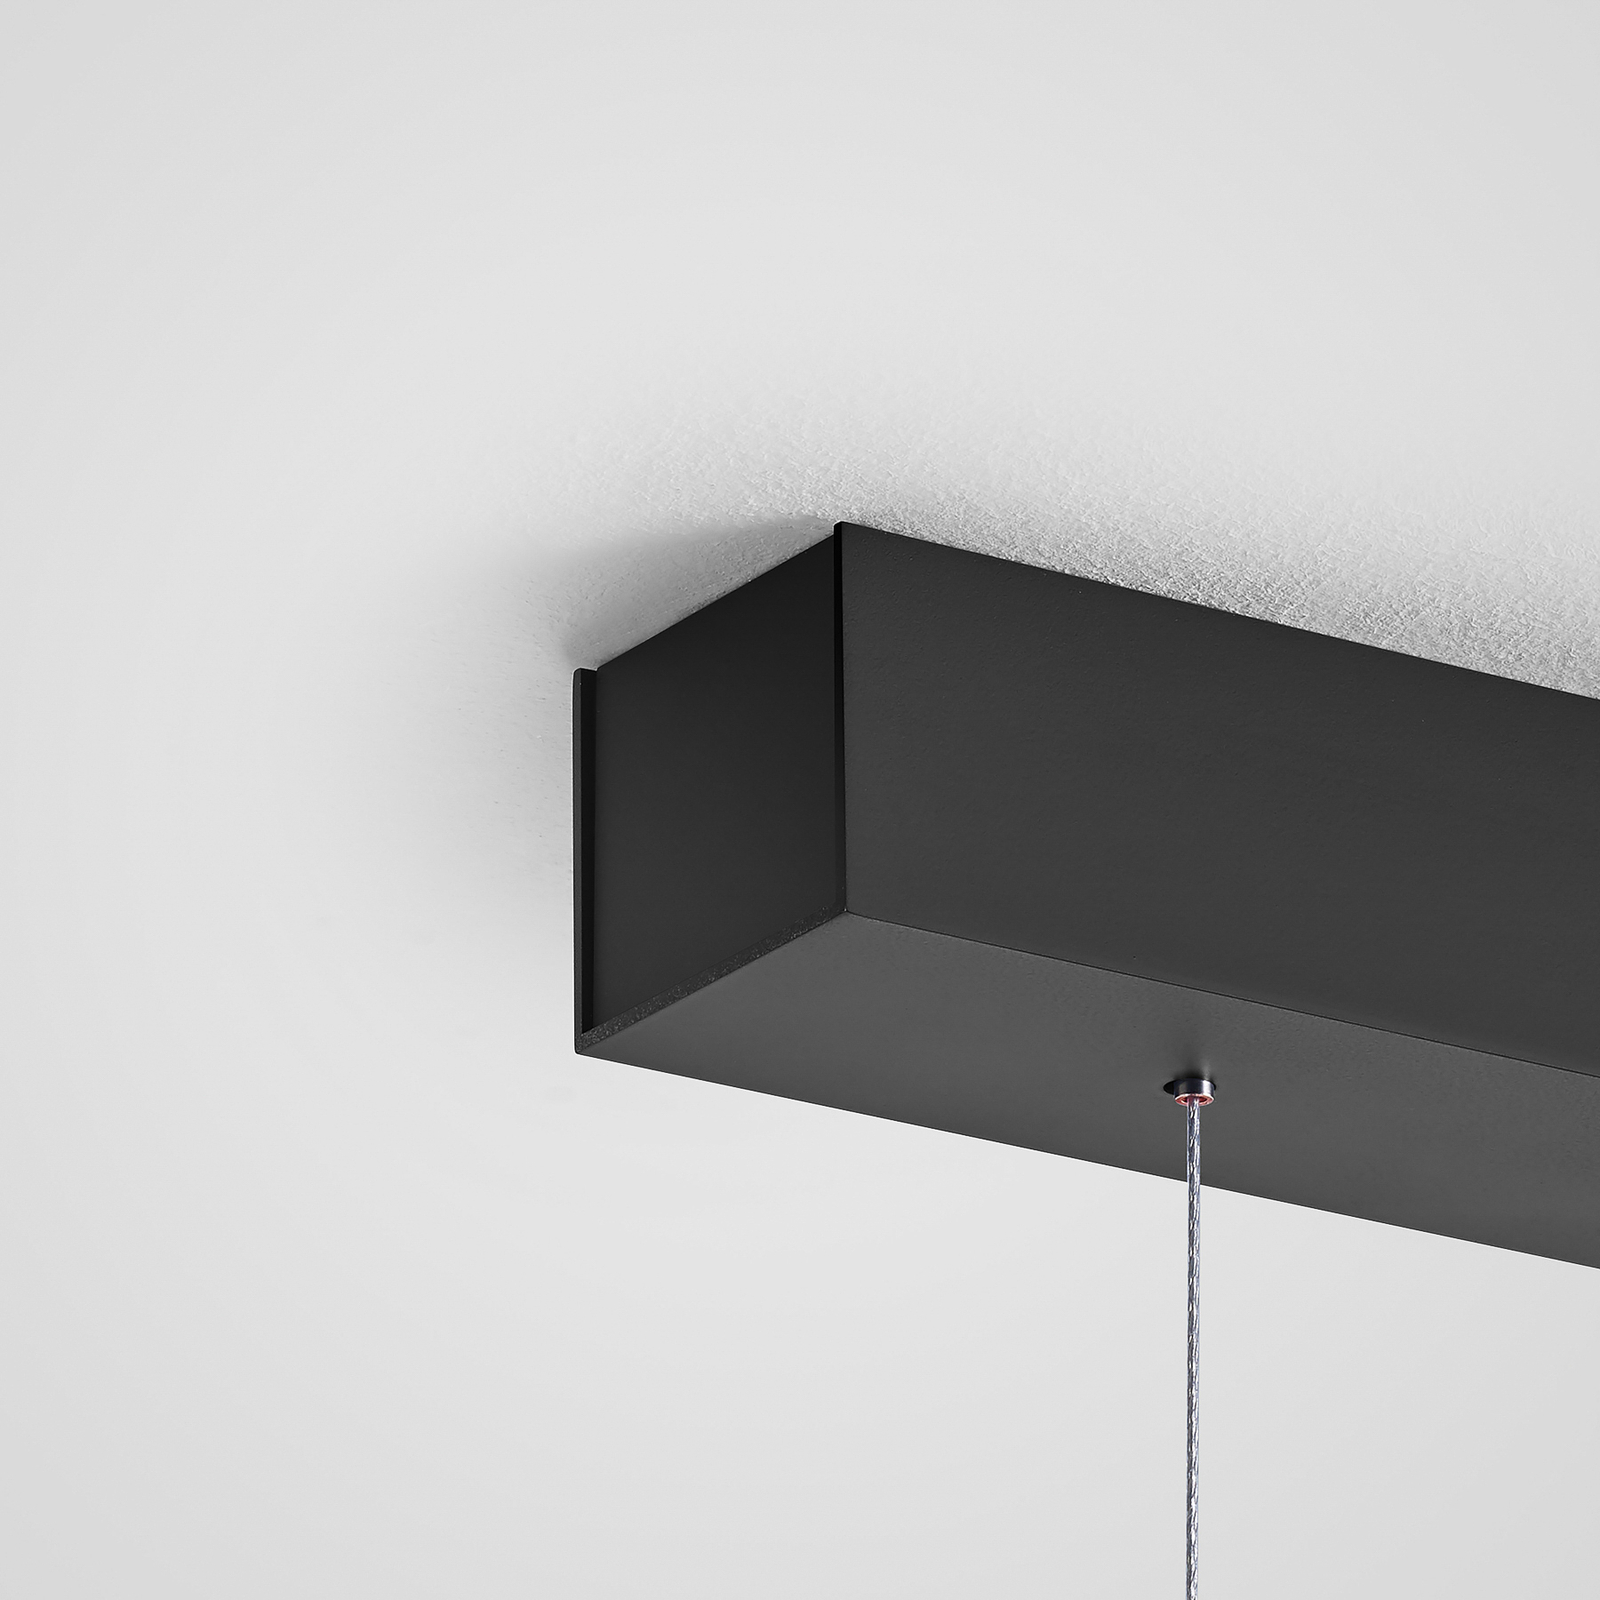 Quitani hanglamp Keijo, zwart/eiken, 103 cm